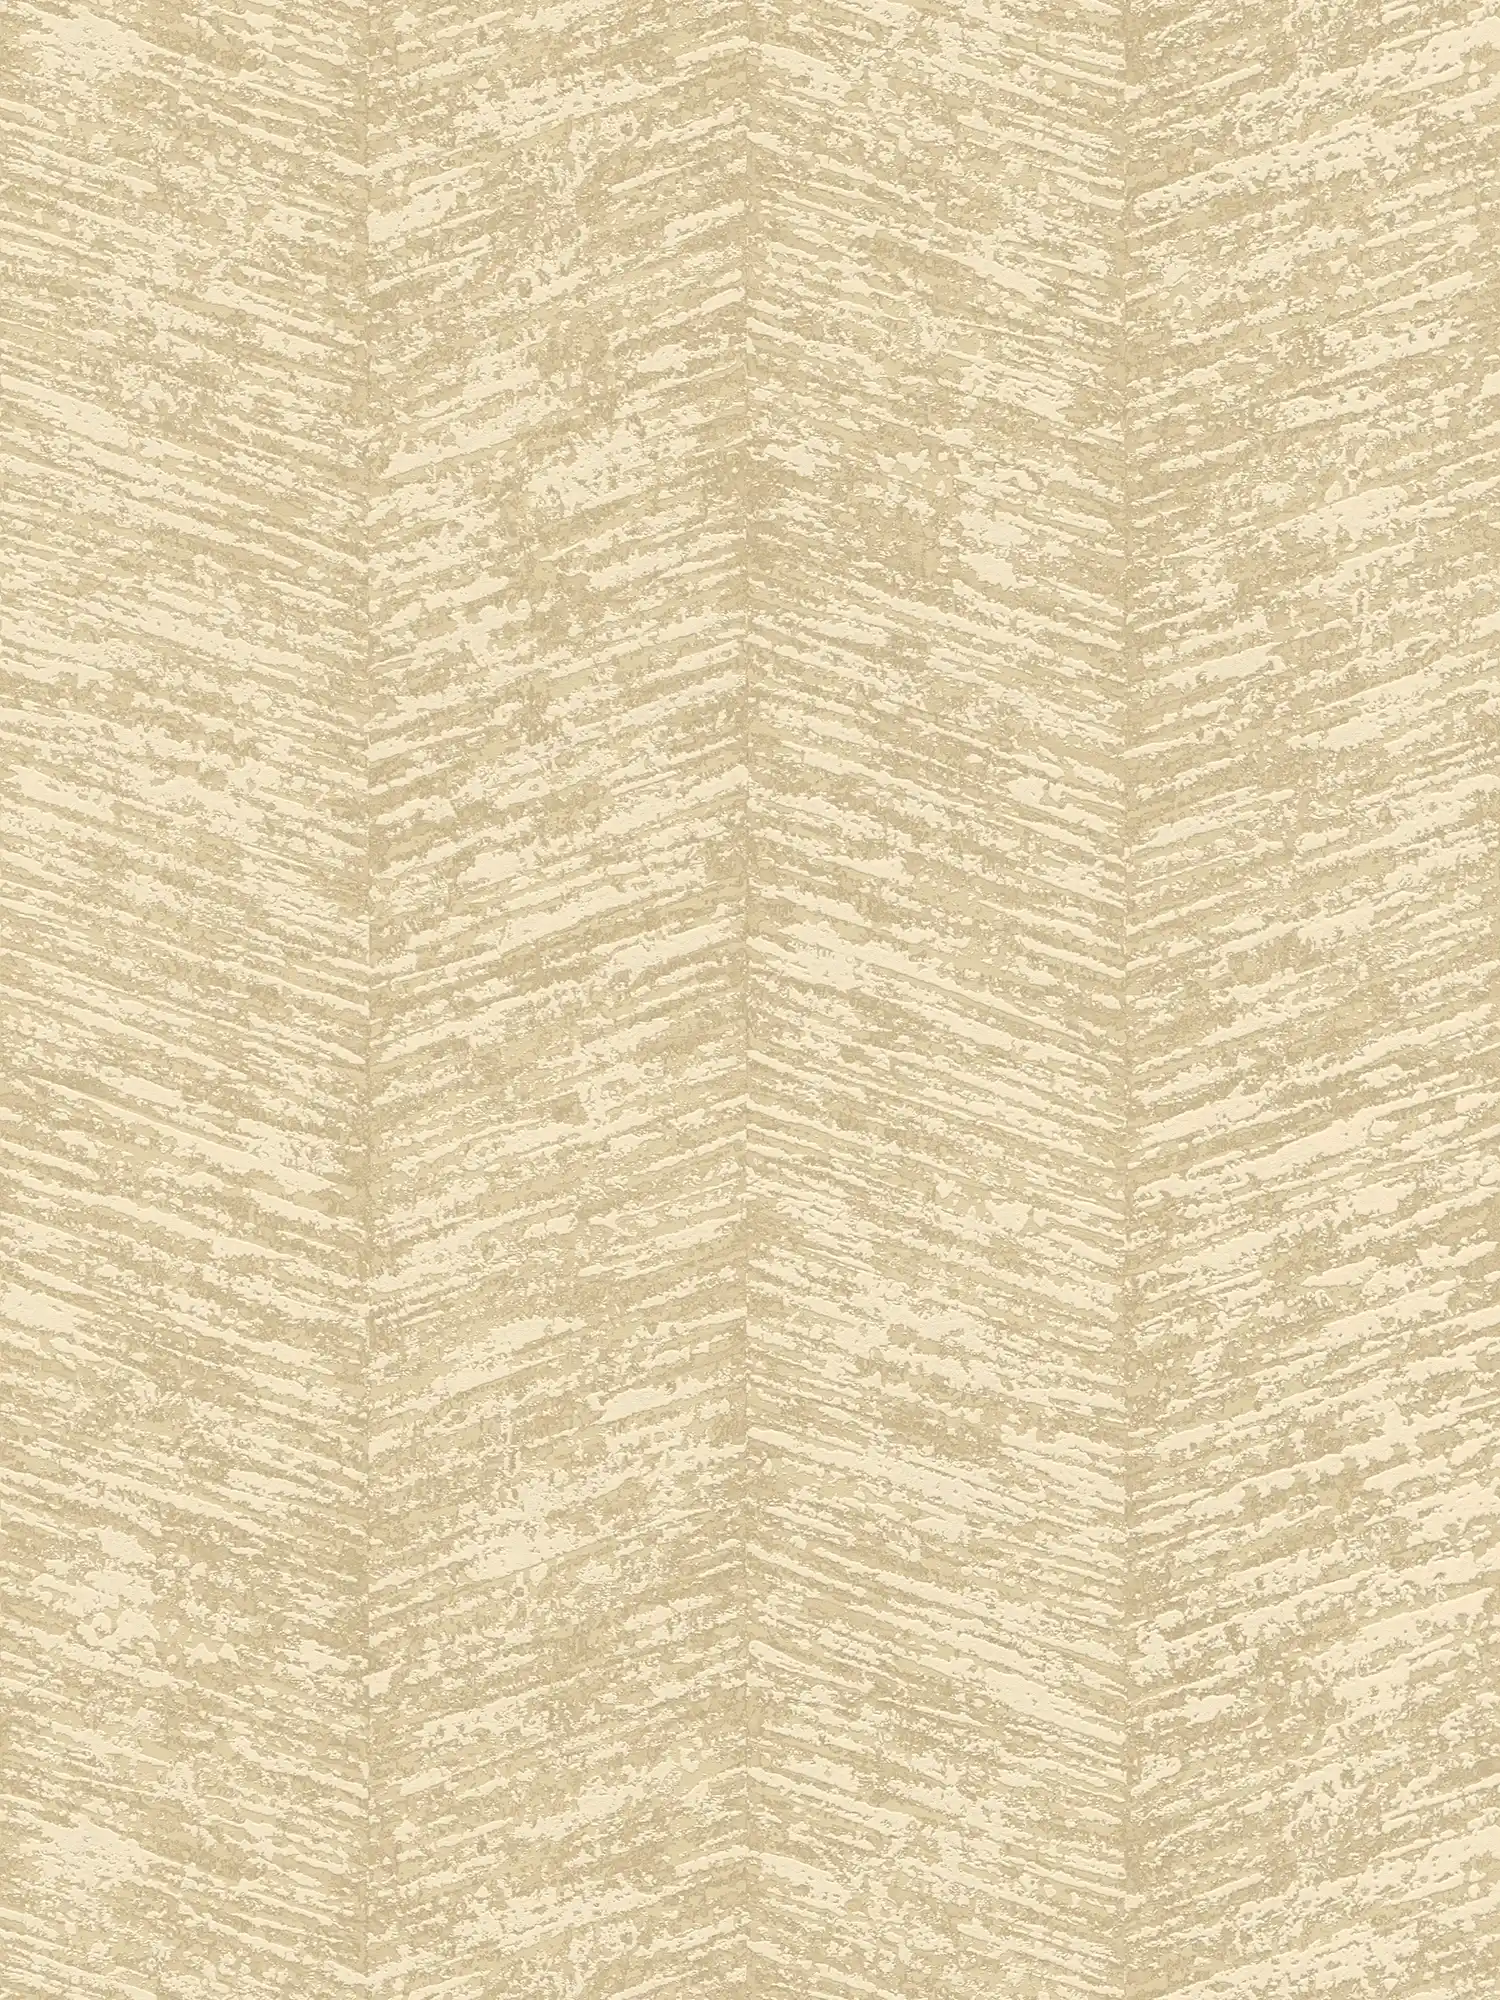 Ethno wallpaper non-woven with texture effect - beige, metallic
